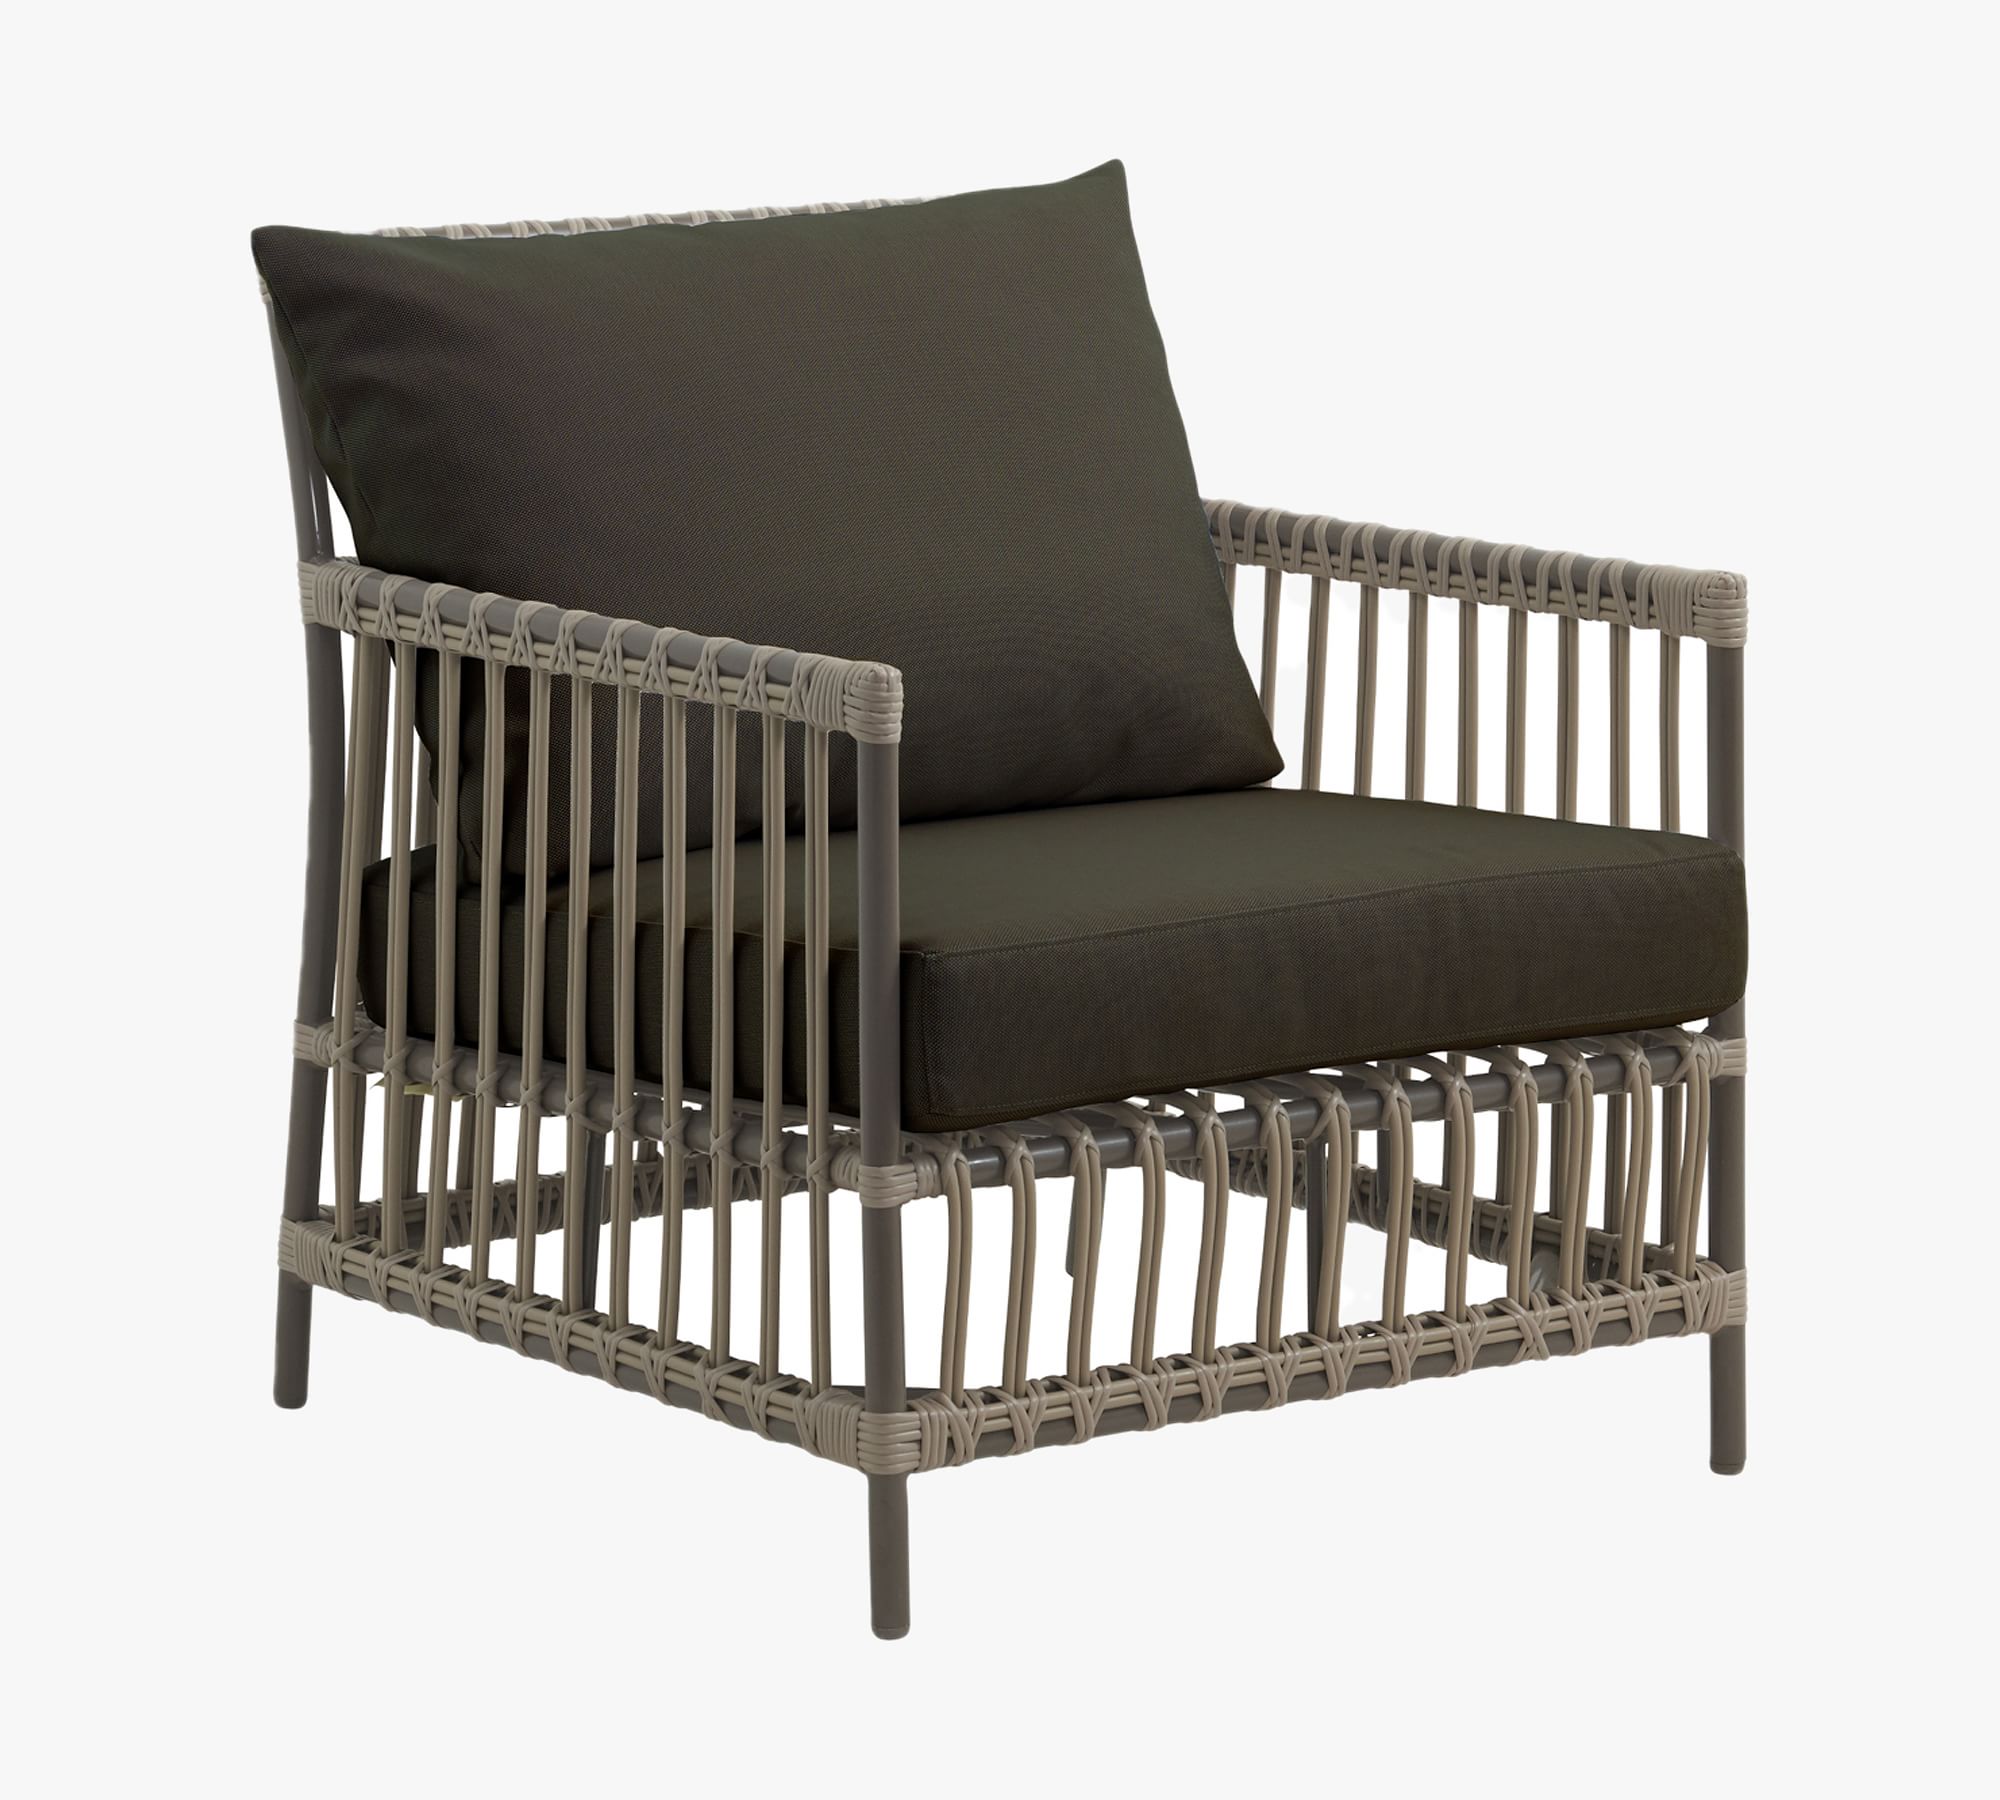 Caroline Alu-Rattan Outdoor Lounge Chair